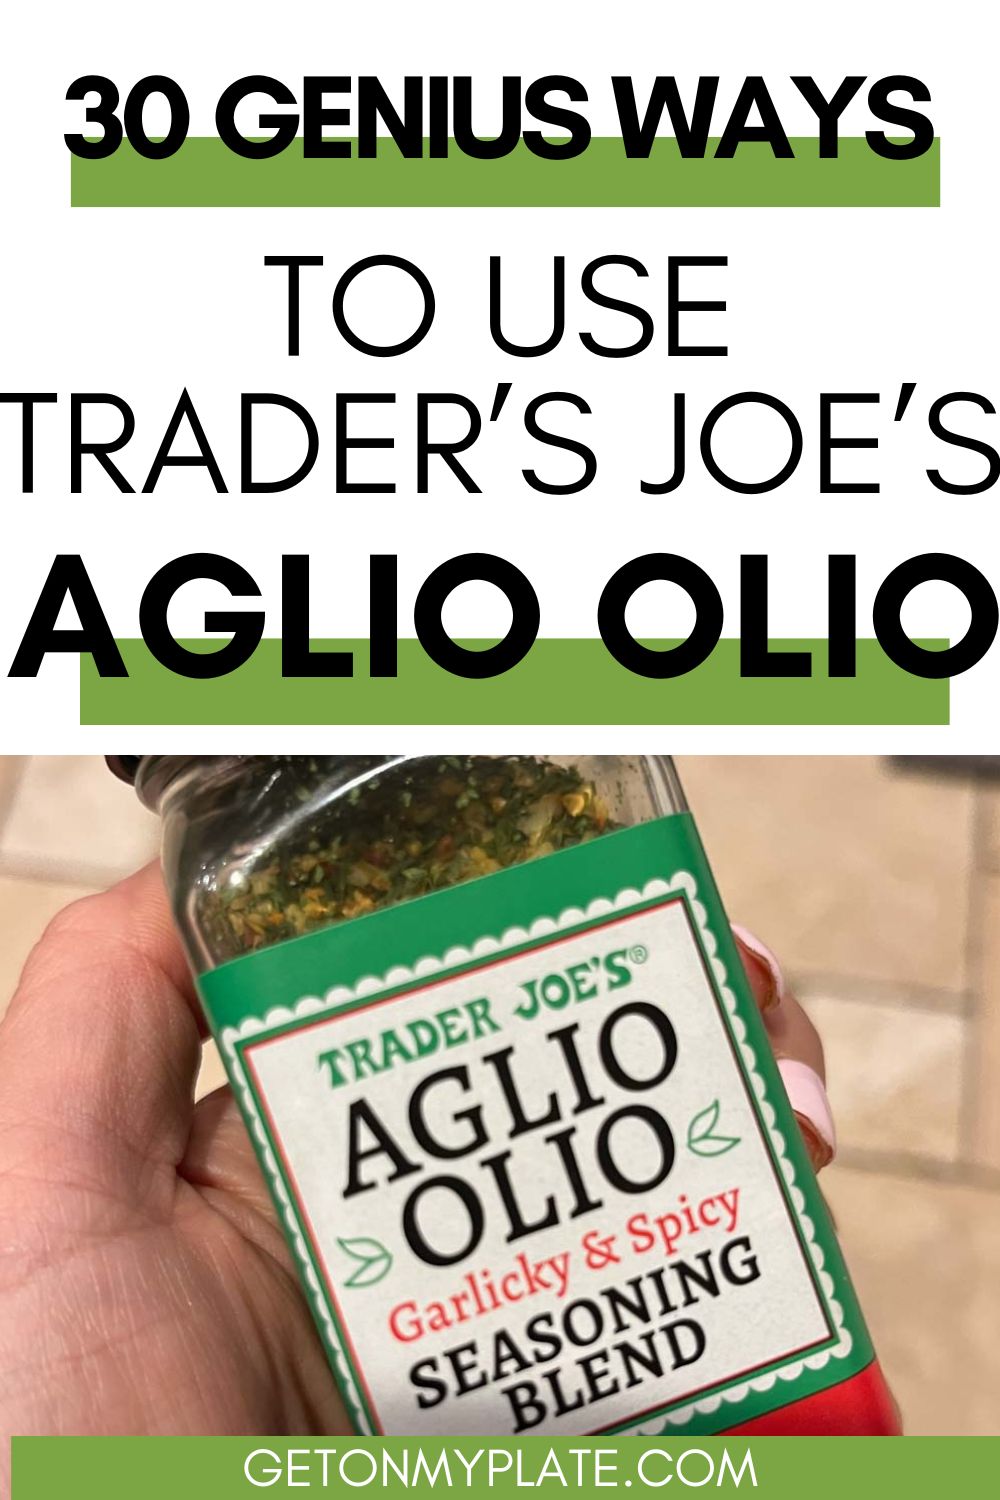 A photo of the bottle of Trader Joe's spice Aglio Olio.